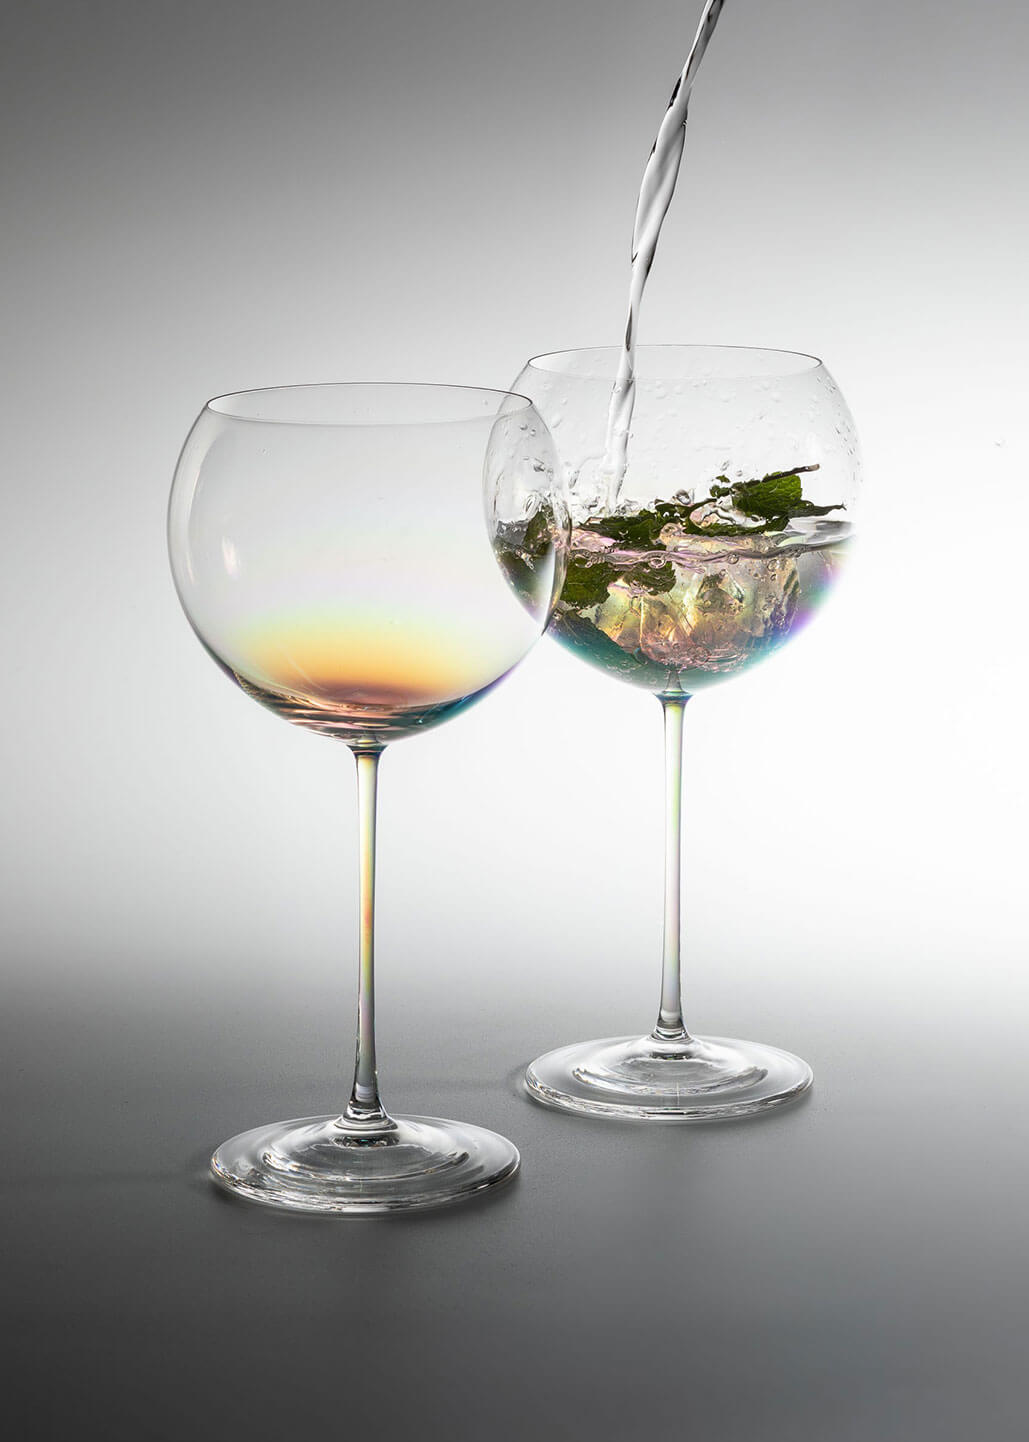 Rainbow Bubbles wine glasses